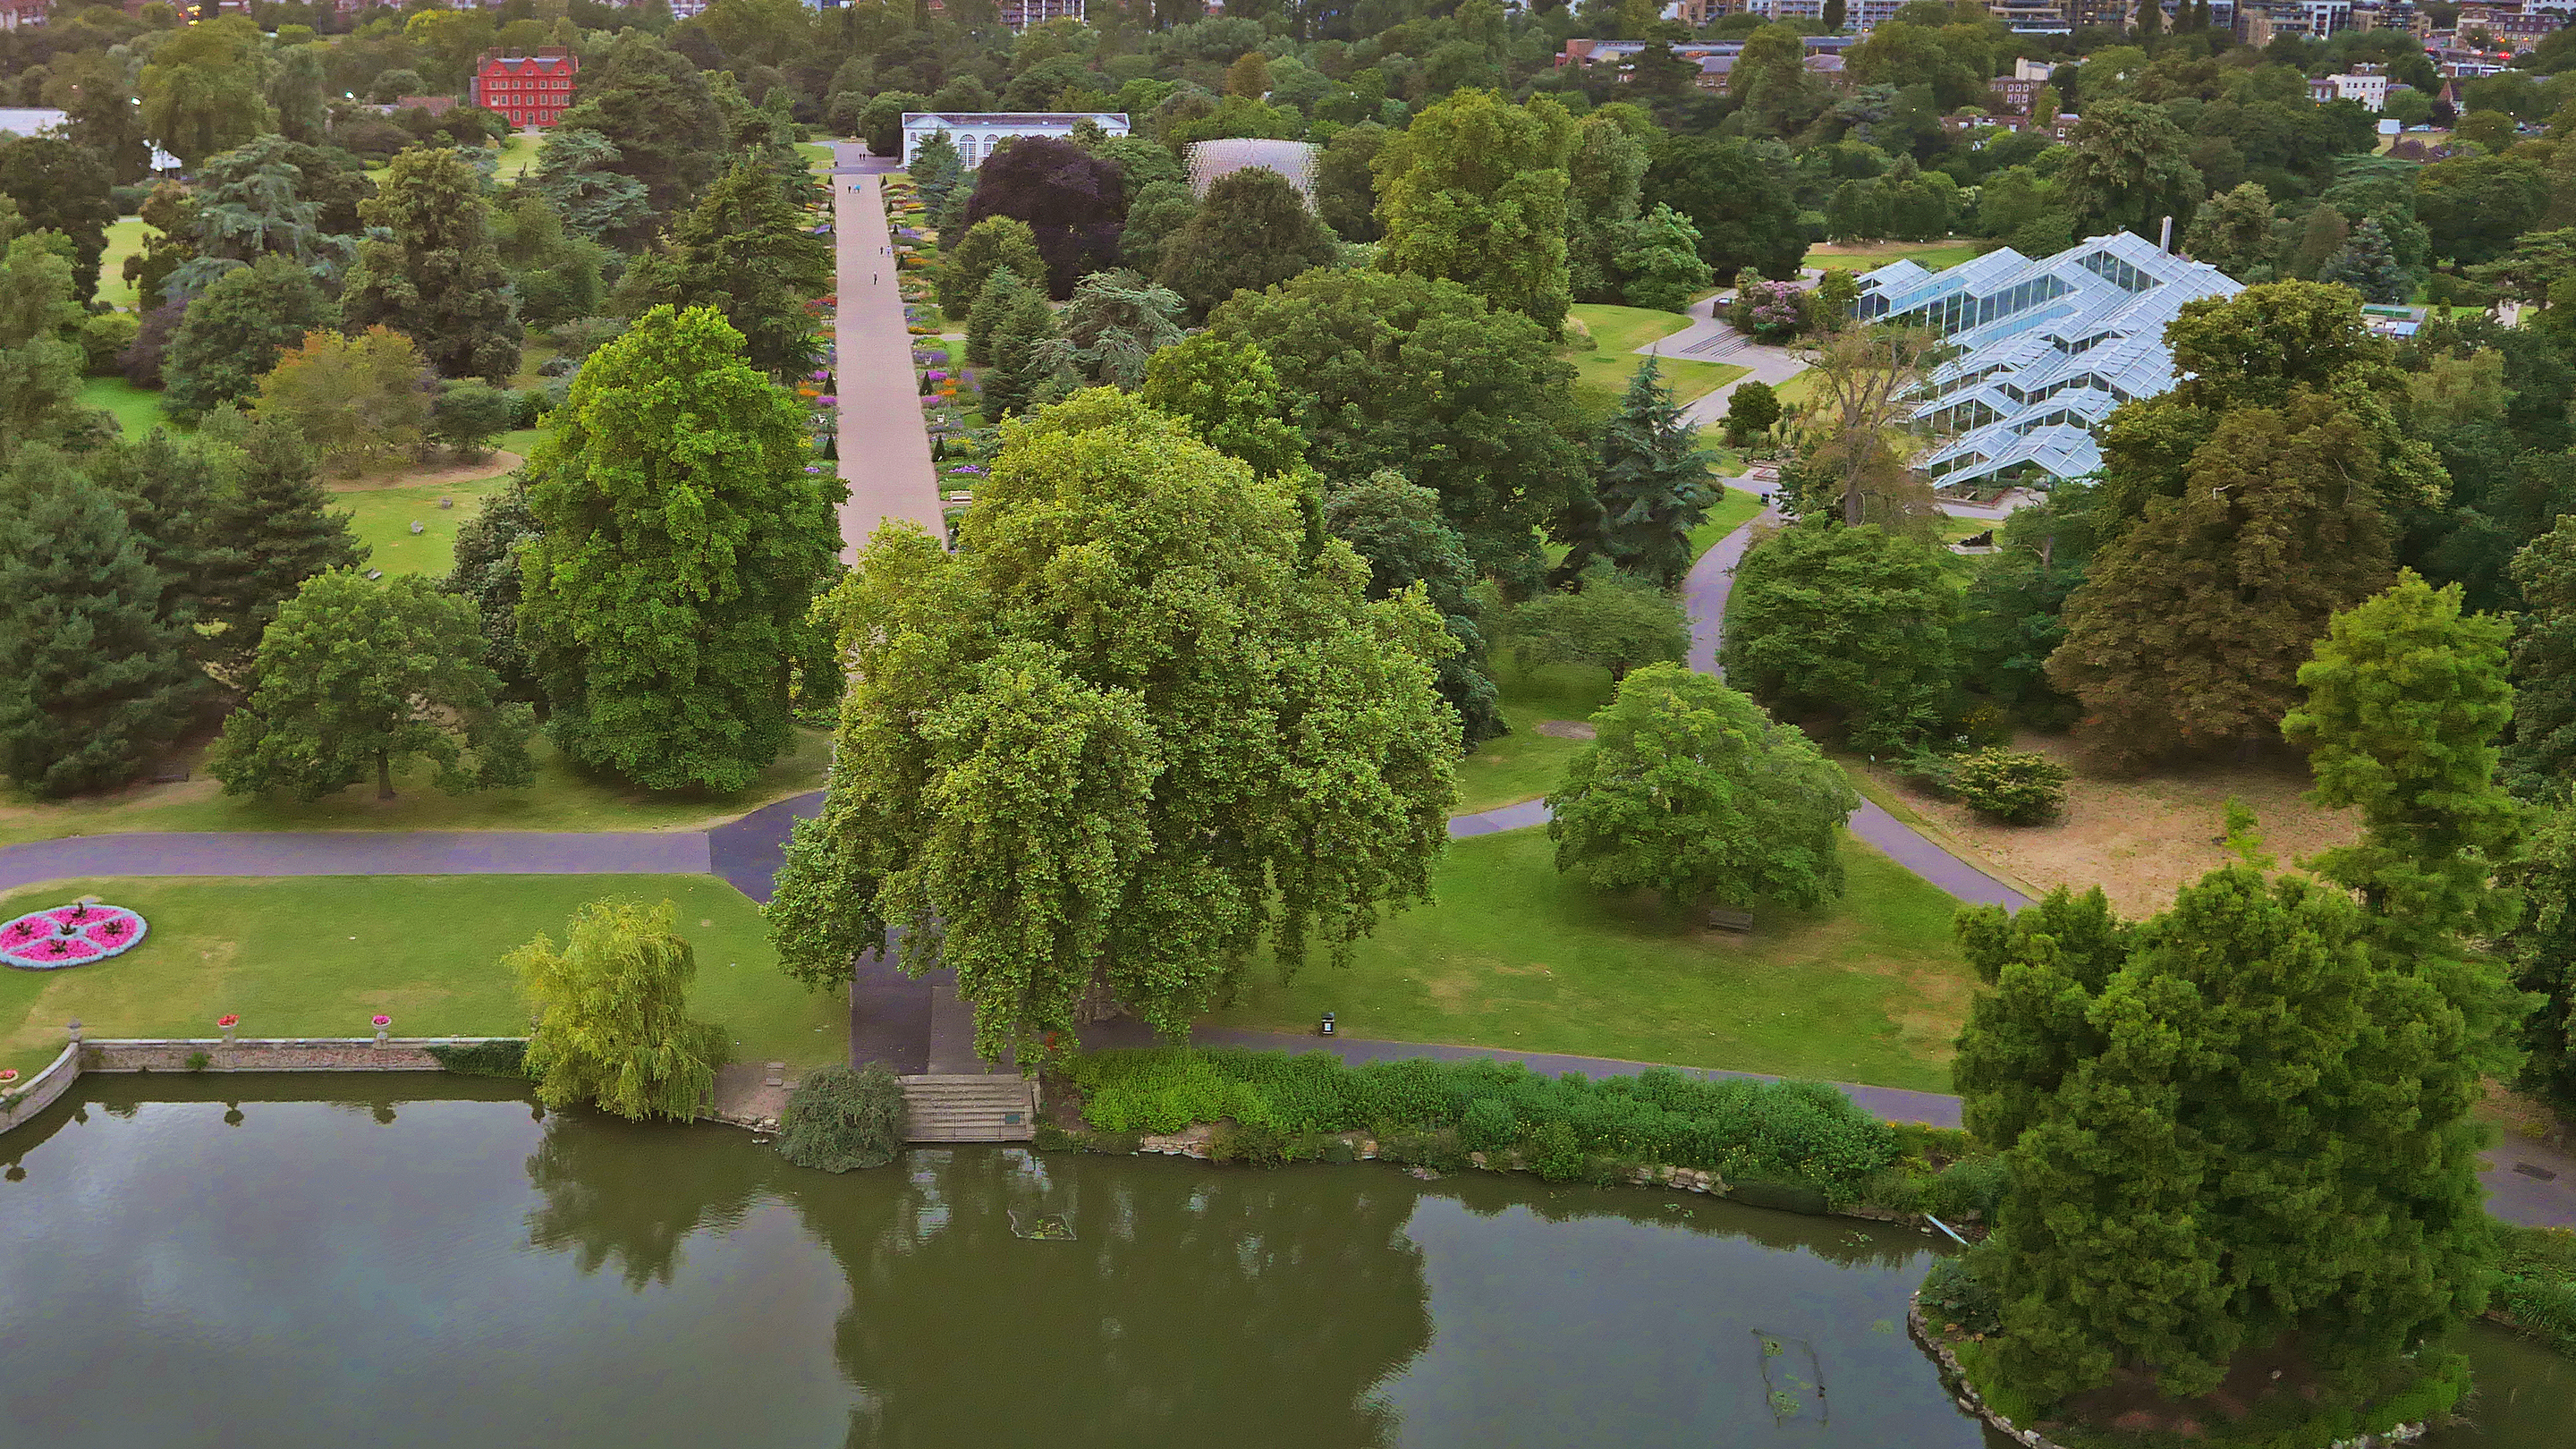 The Arboretum at Kew Gardens